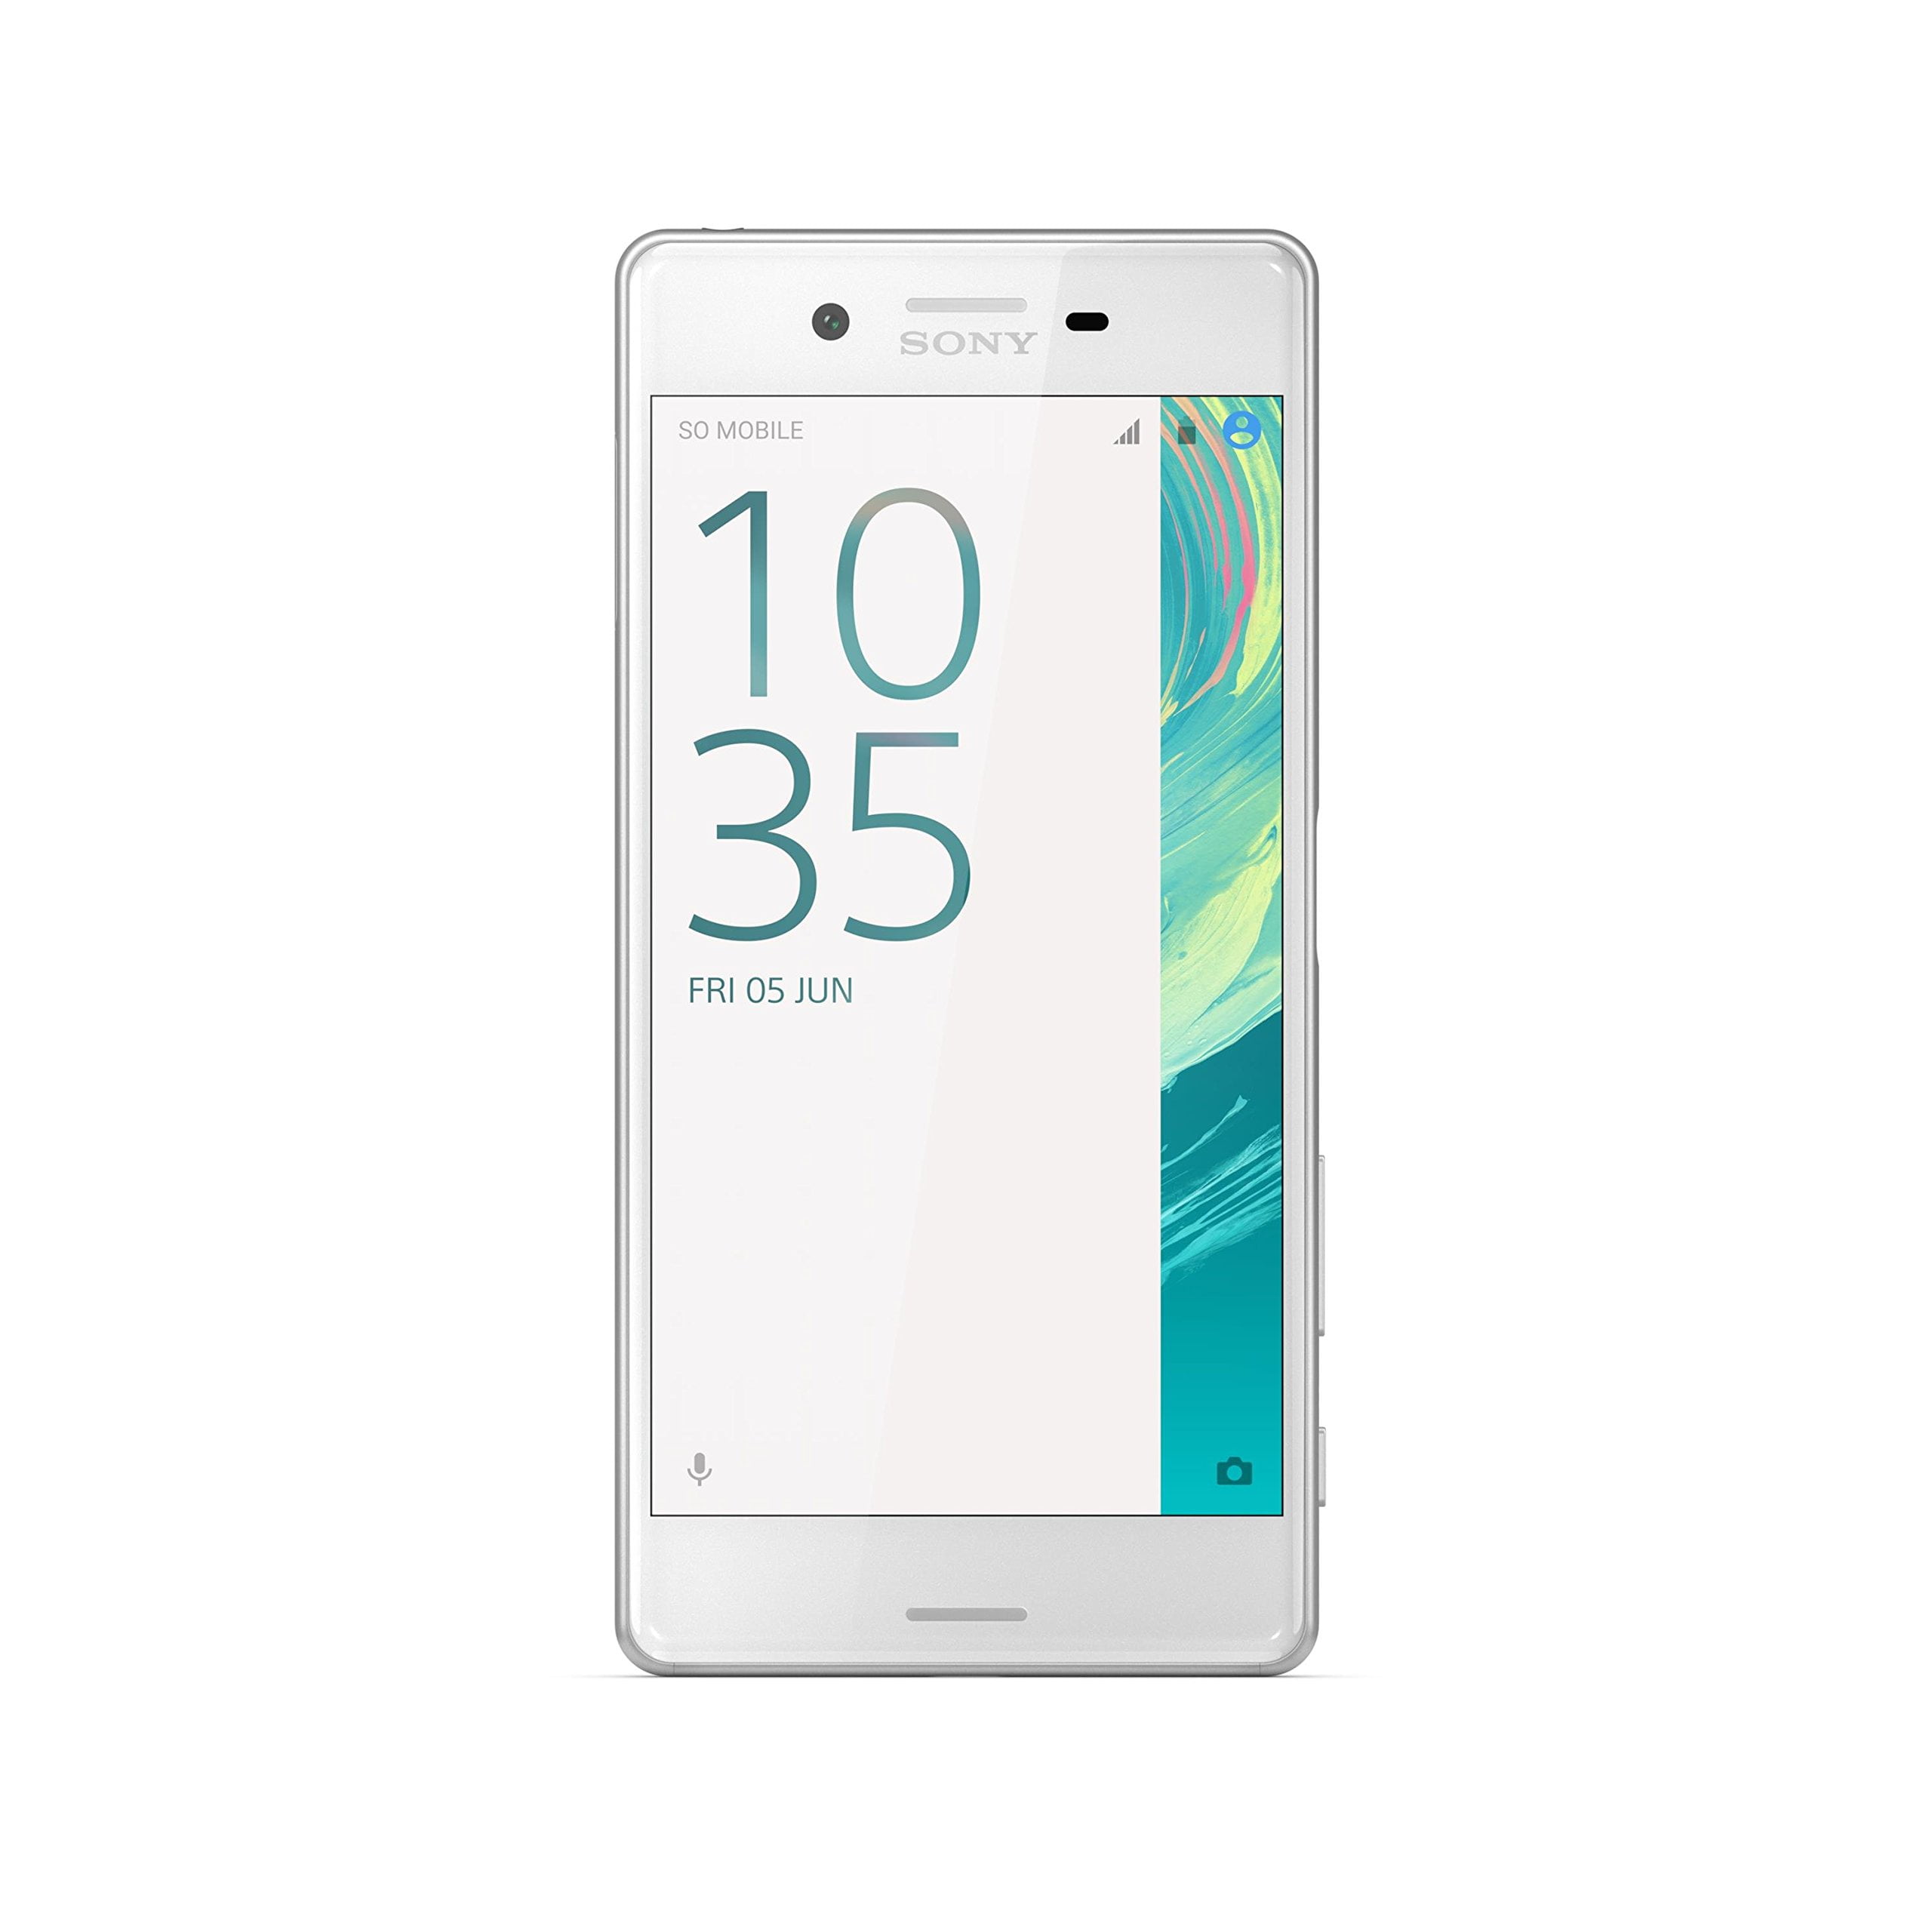 Scorch Onbepaald Feodaal Sony Xperia X F5121 32GB Unlocked GSM 4G LTE 23MP Camera Phone - White -  Walmart.com